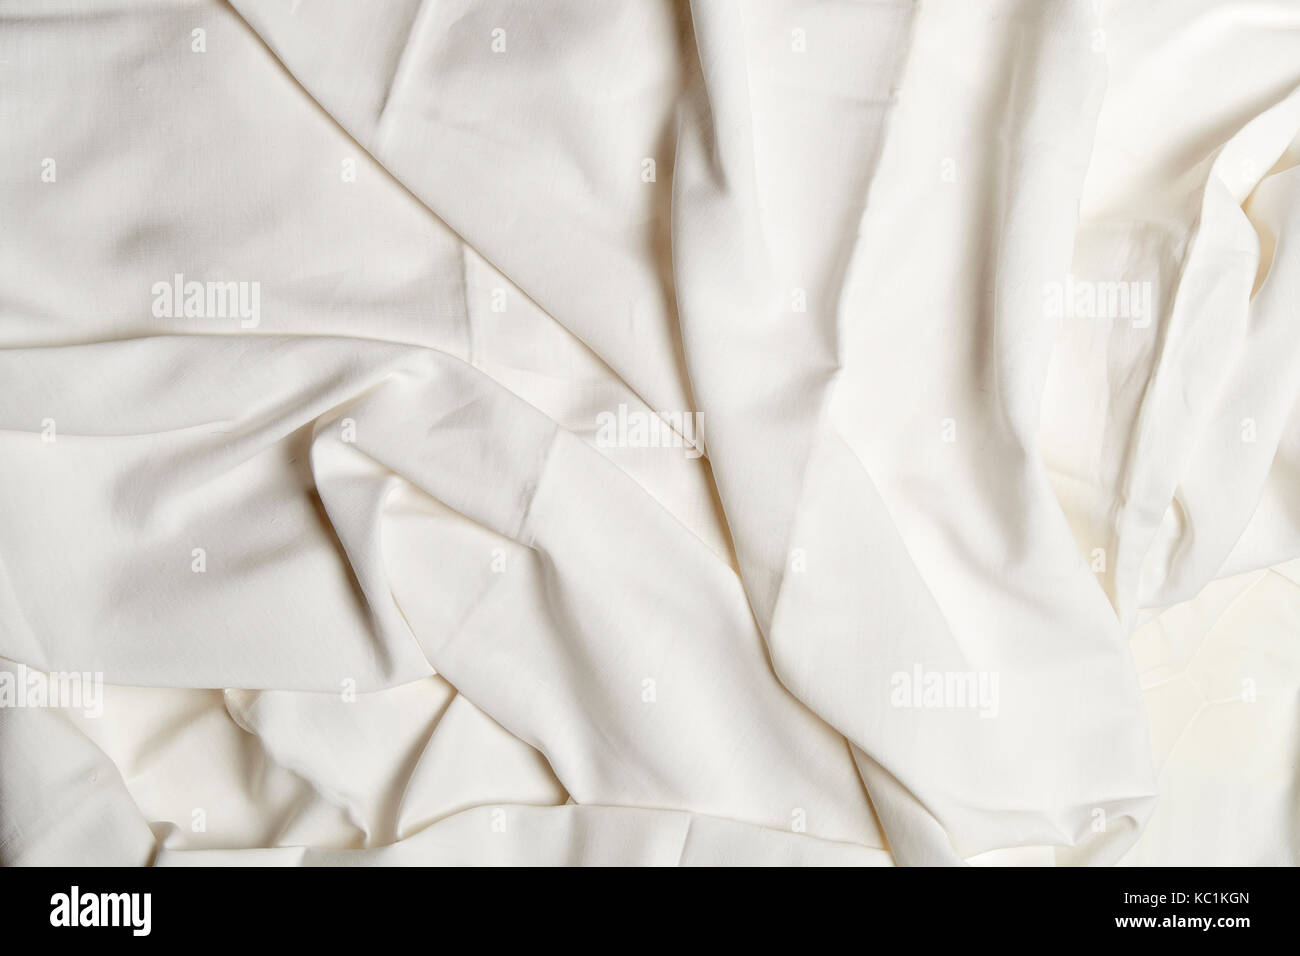 Wrinkled white cloth background Stock Photo by ©alisanna 122731564